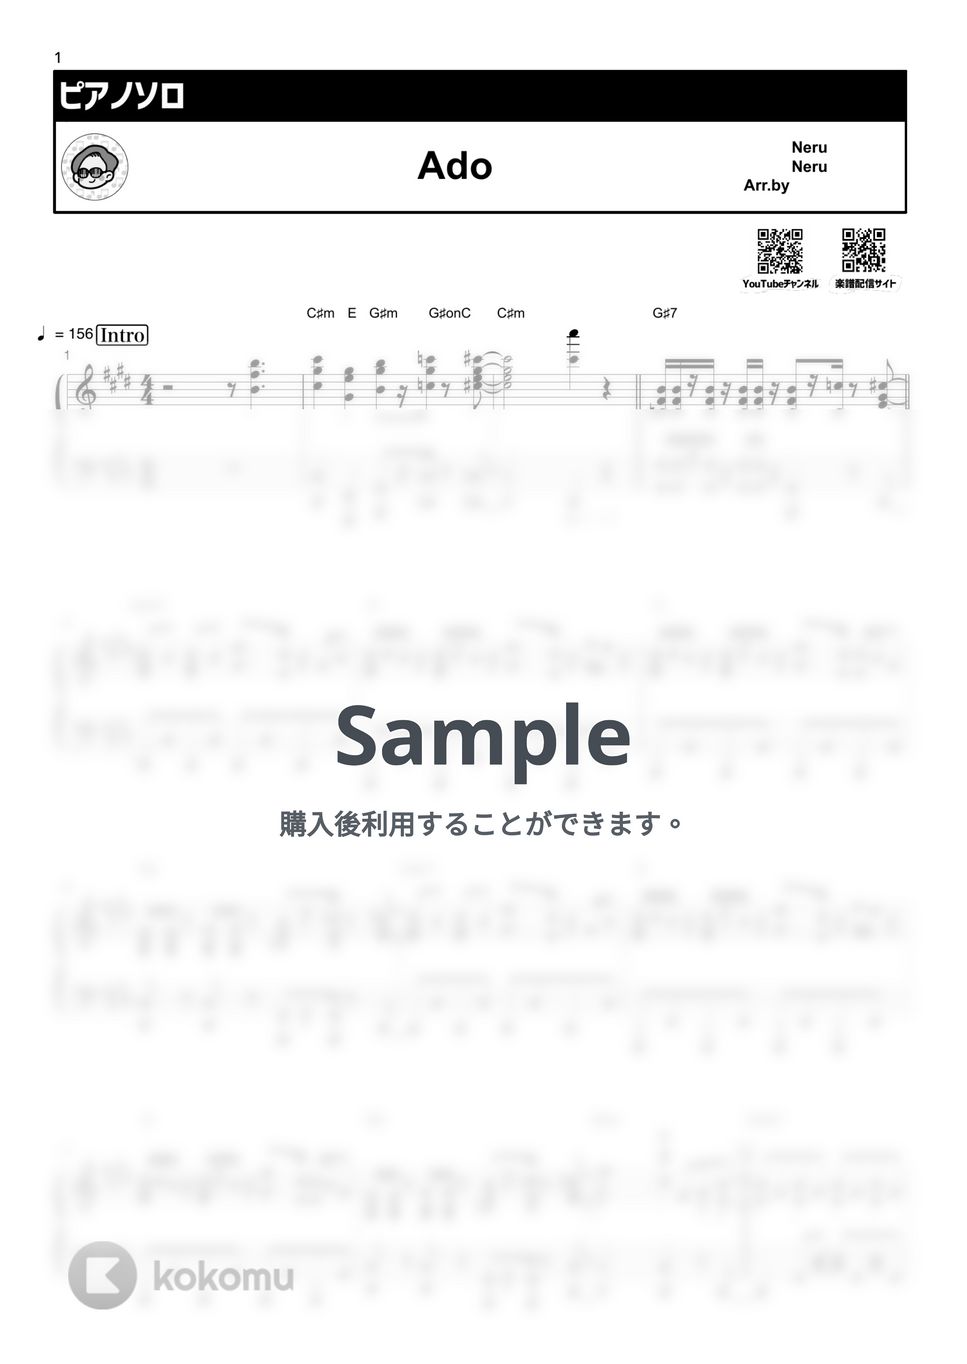 Ado - 阿修羅ちゃん by シータピアノ